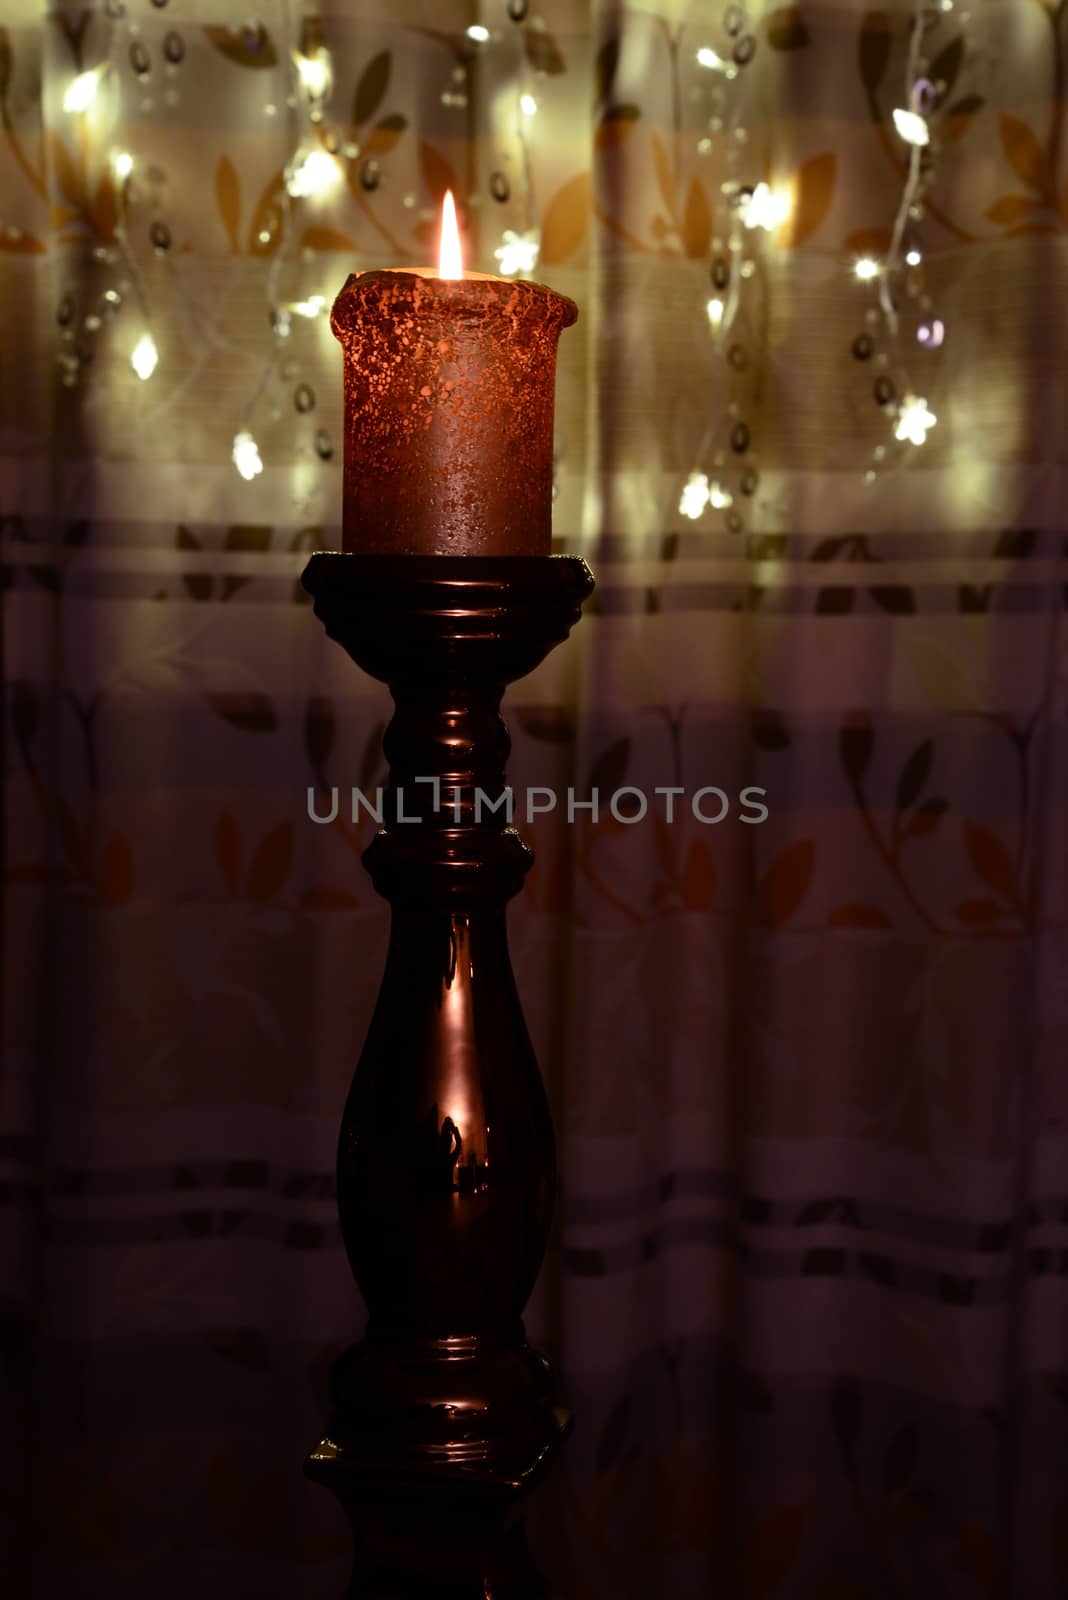 Photo of an orange candle burning over Christmas lights background.